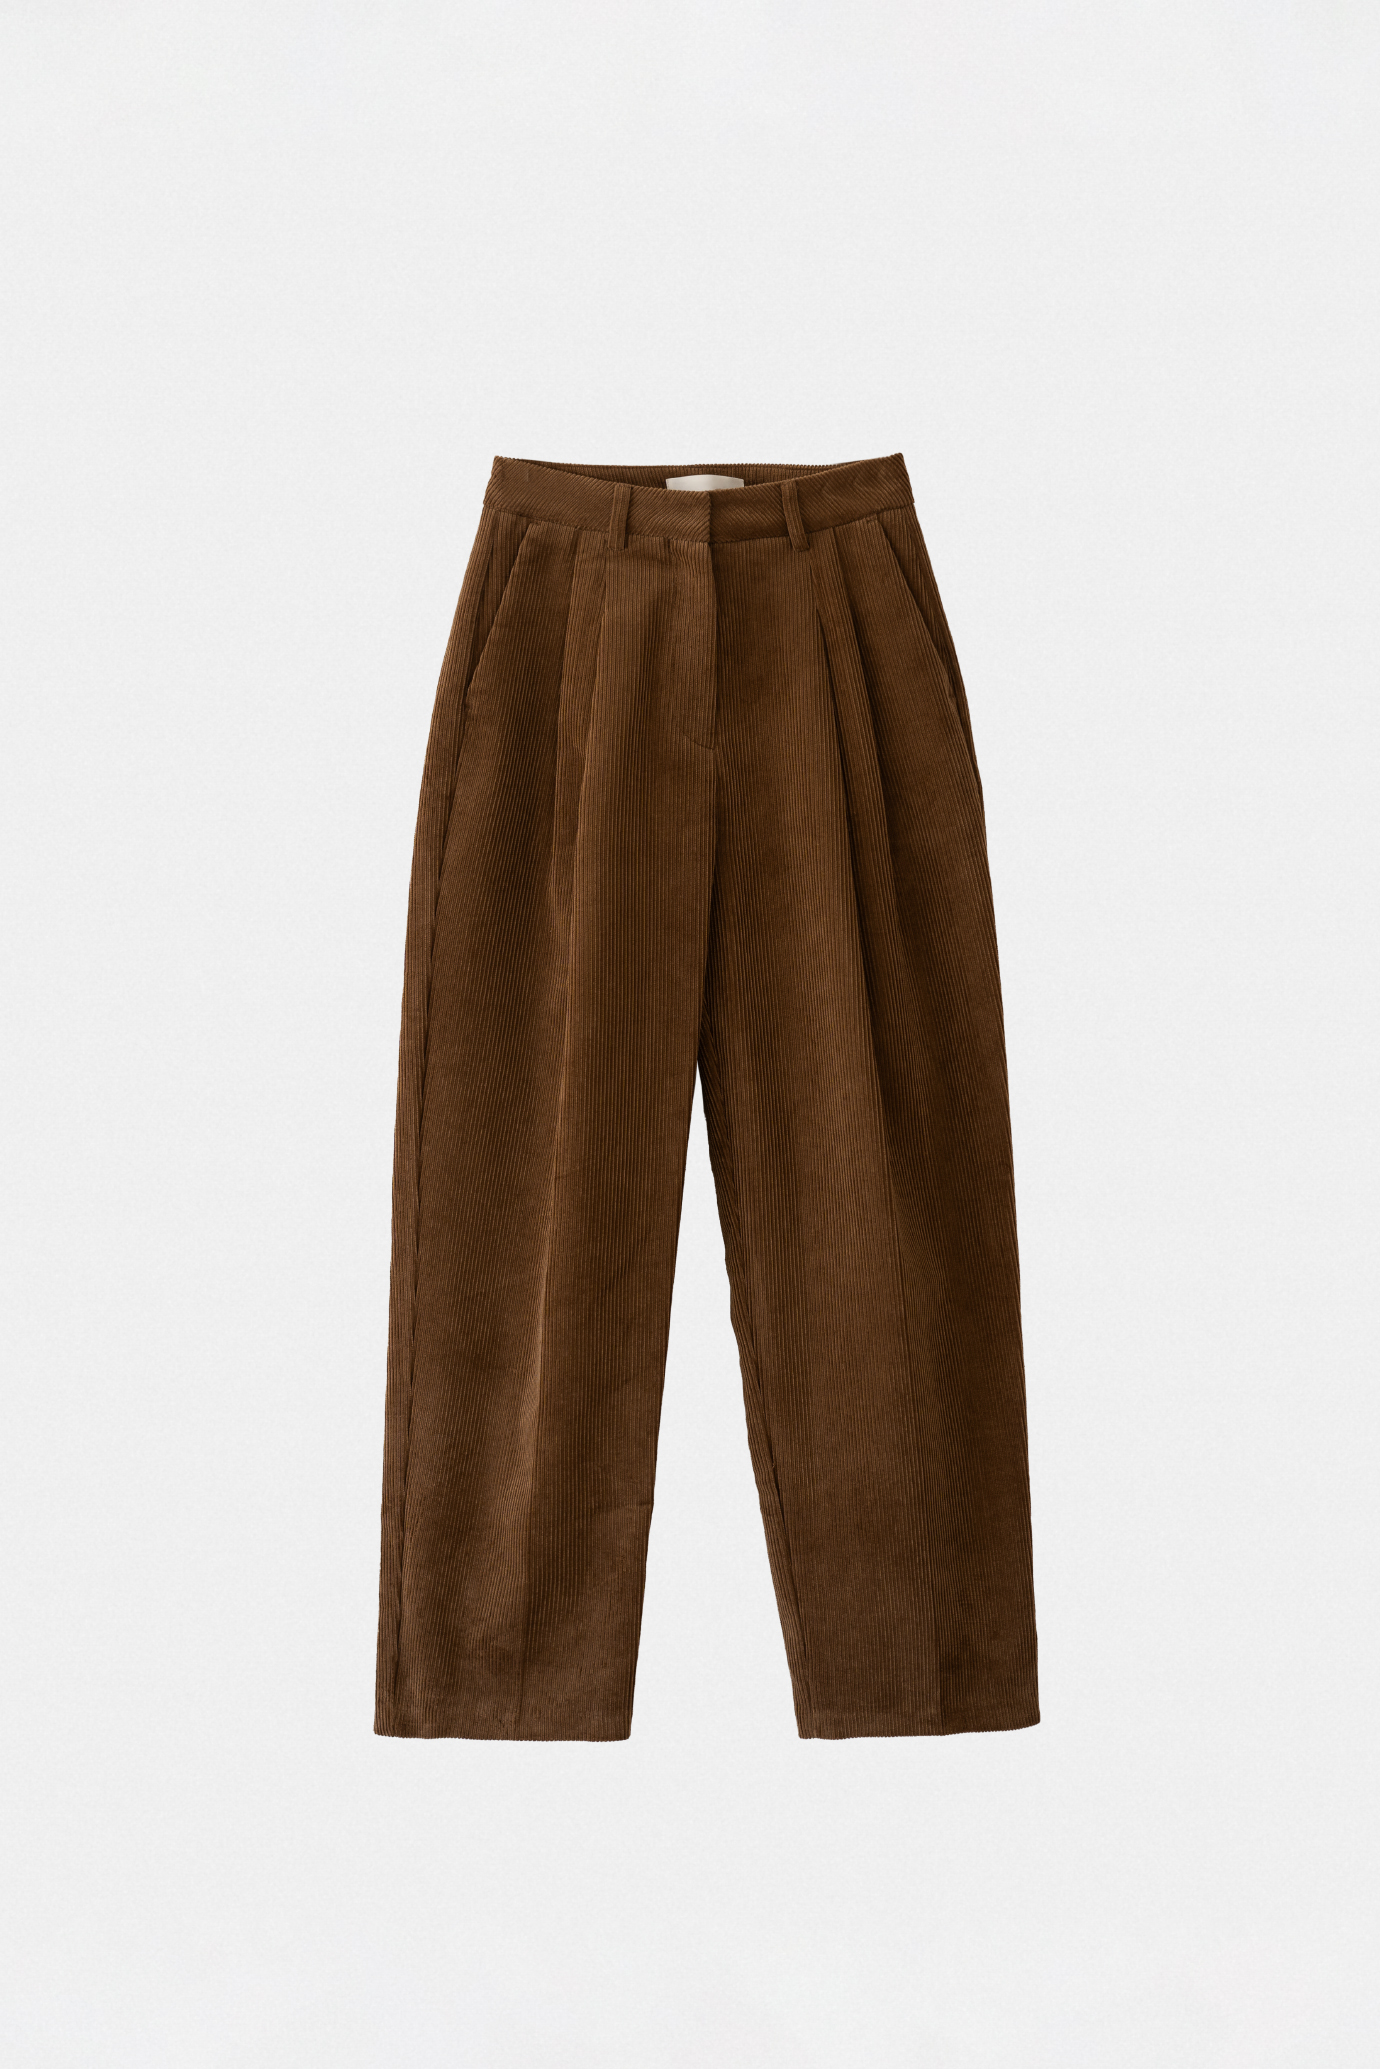 19334_Corduroy Pleated Trousers [주문일로부터 10일이내 배송]